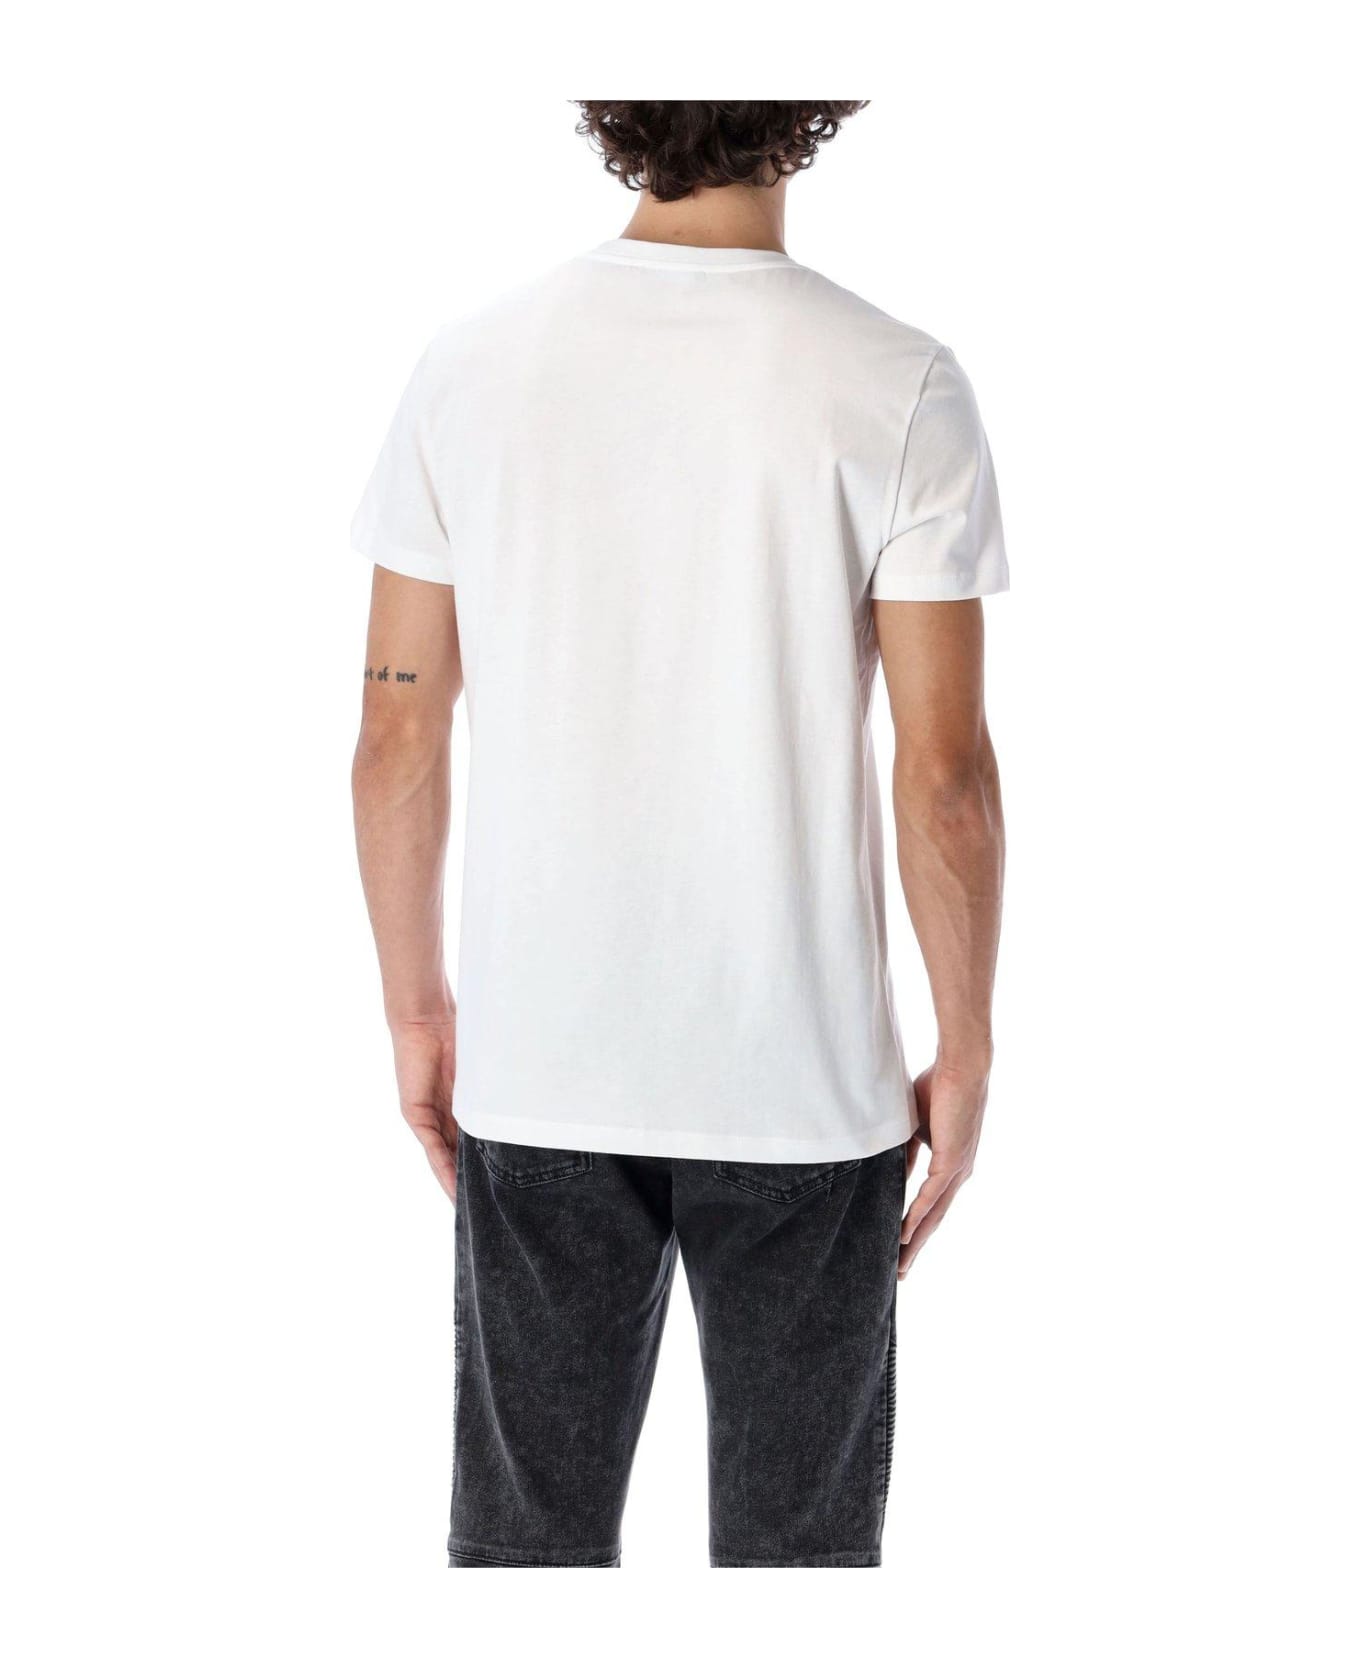 Balmain Logo Print Crewneck T-shirt - White